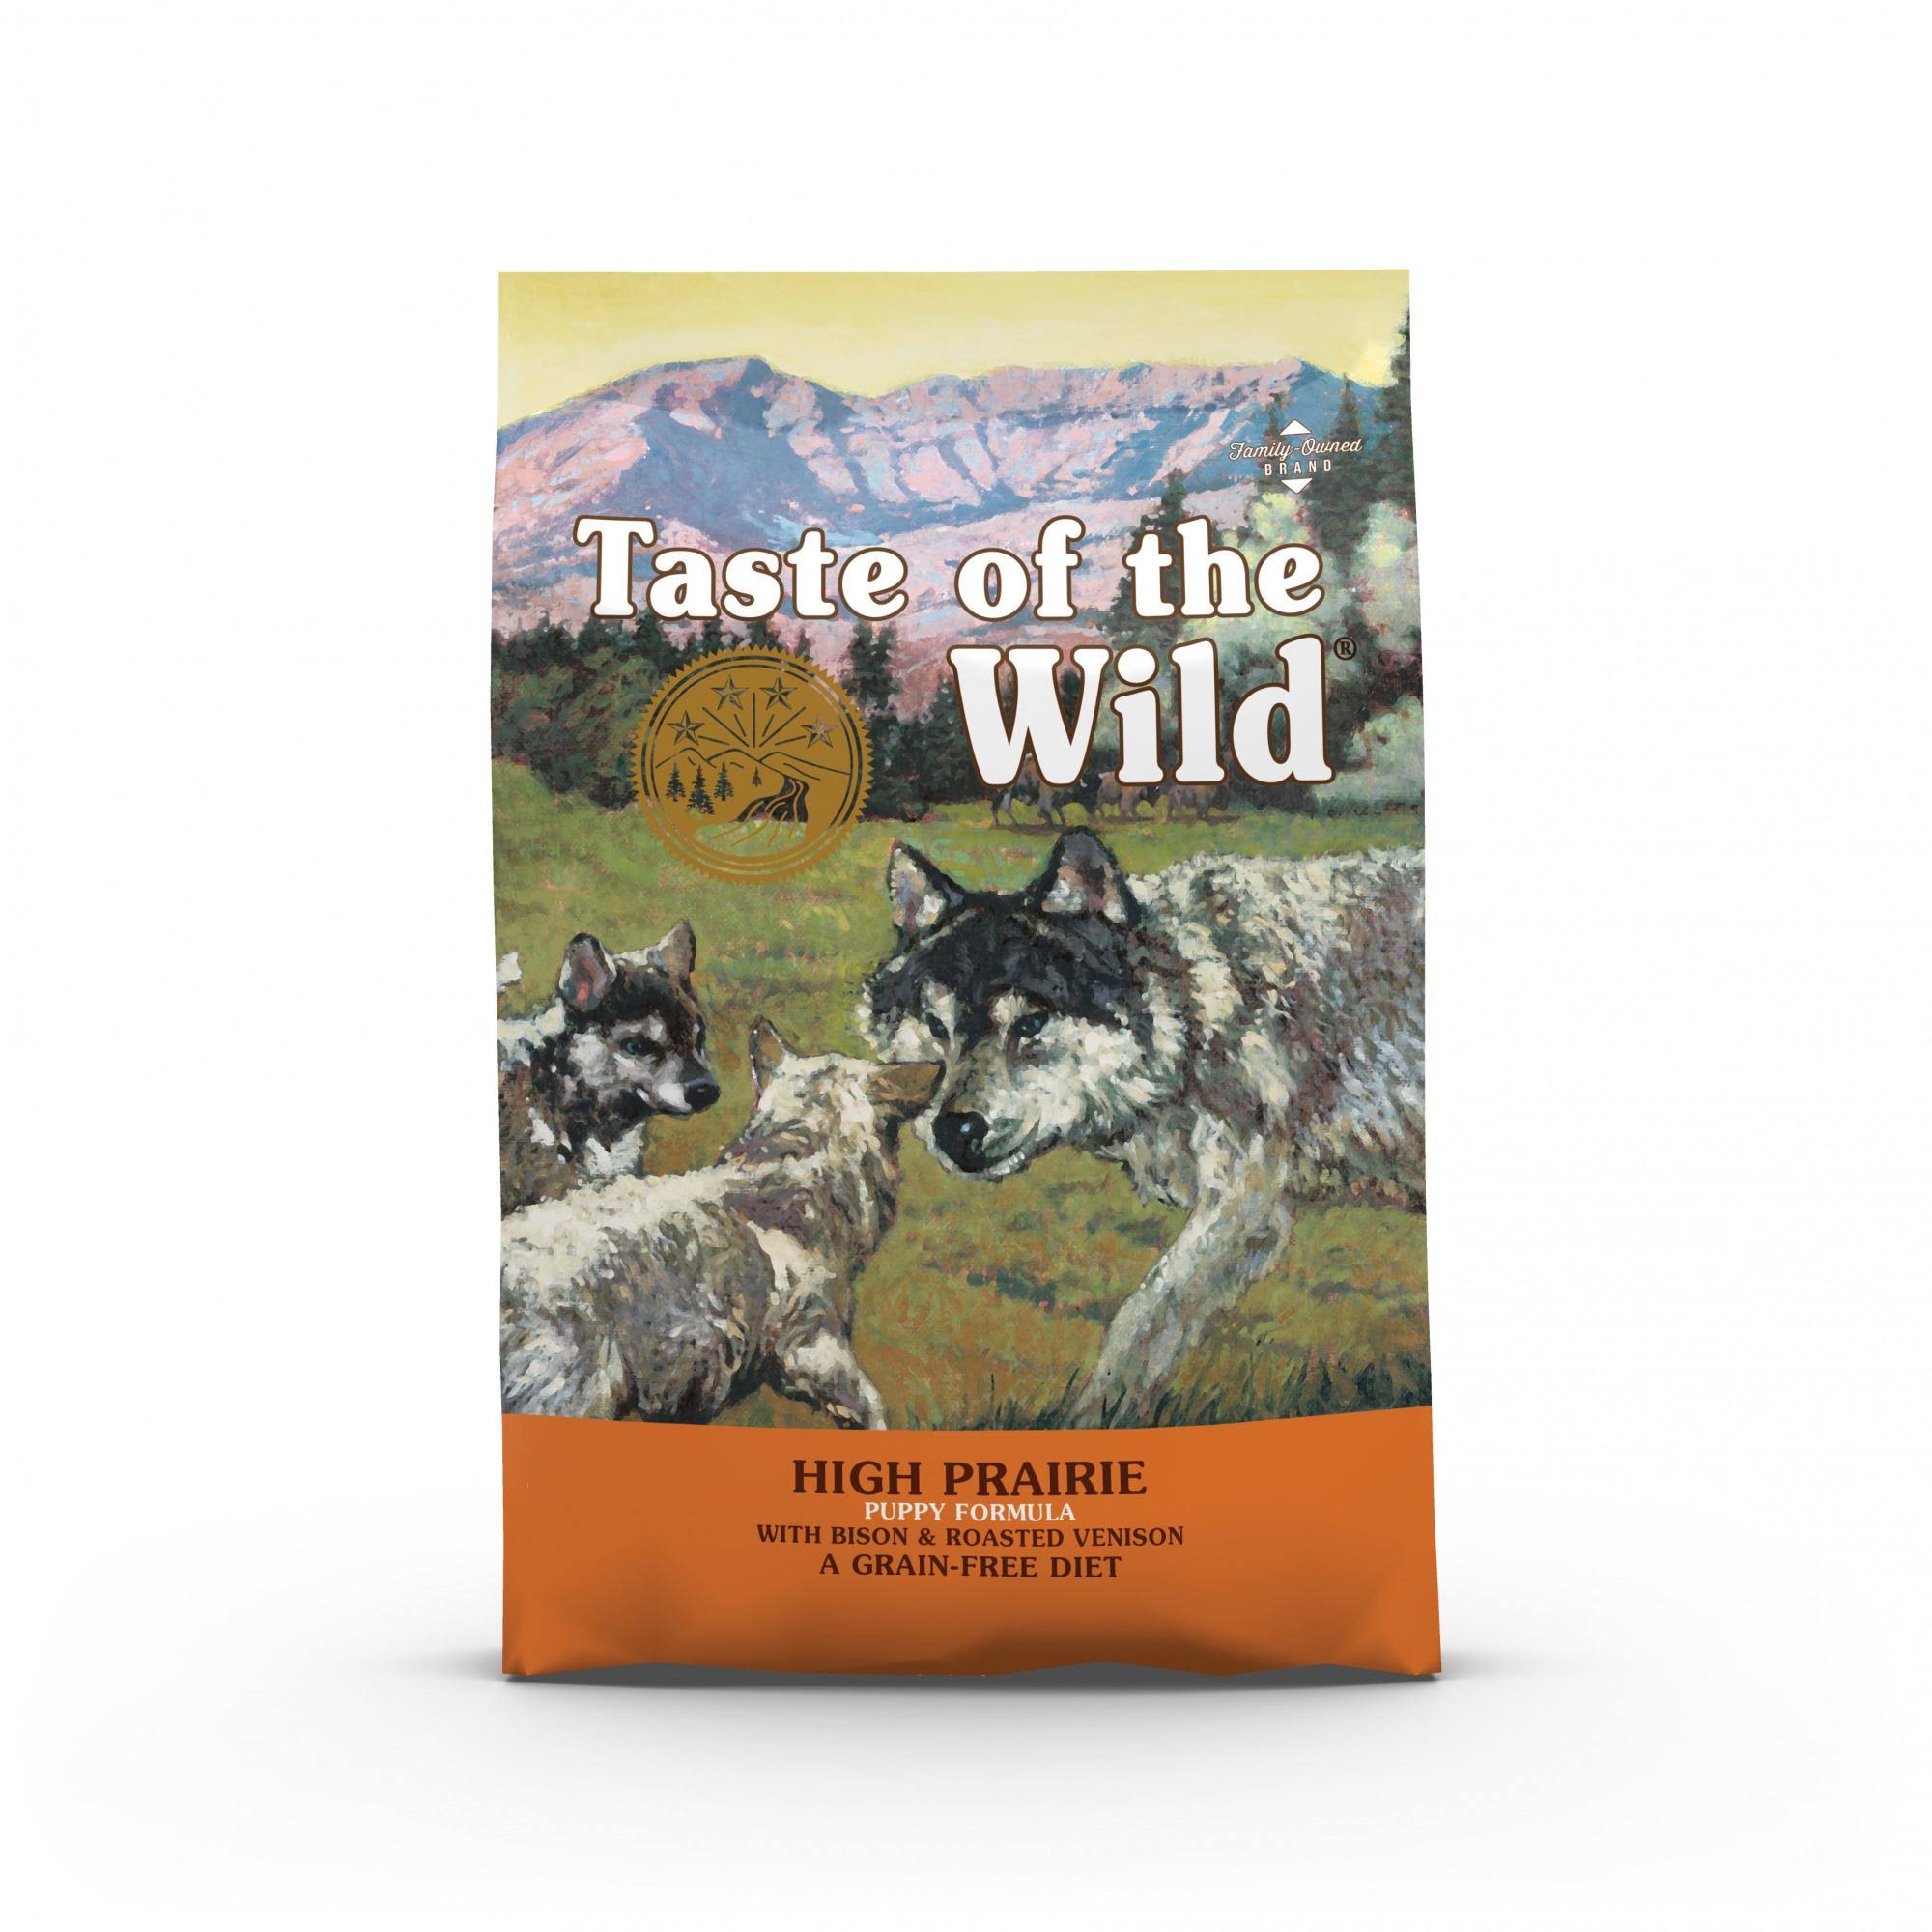 Taste of the Wild Puppy Food - High Prairie, Grain Free, with Bison, 5lb